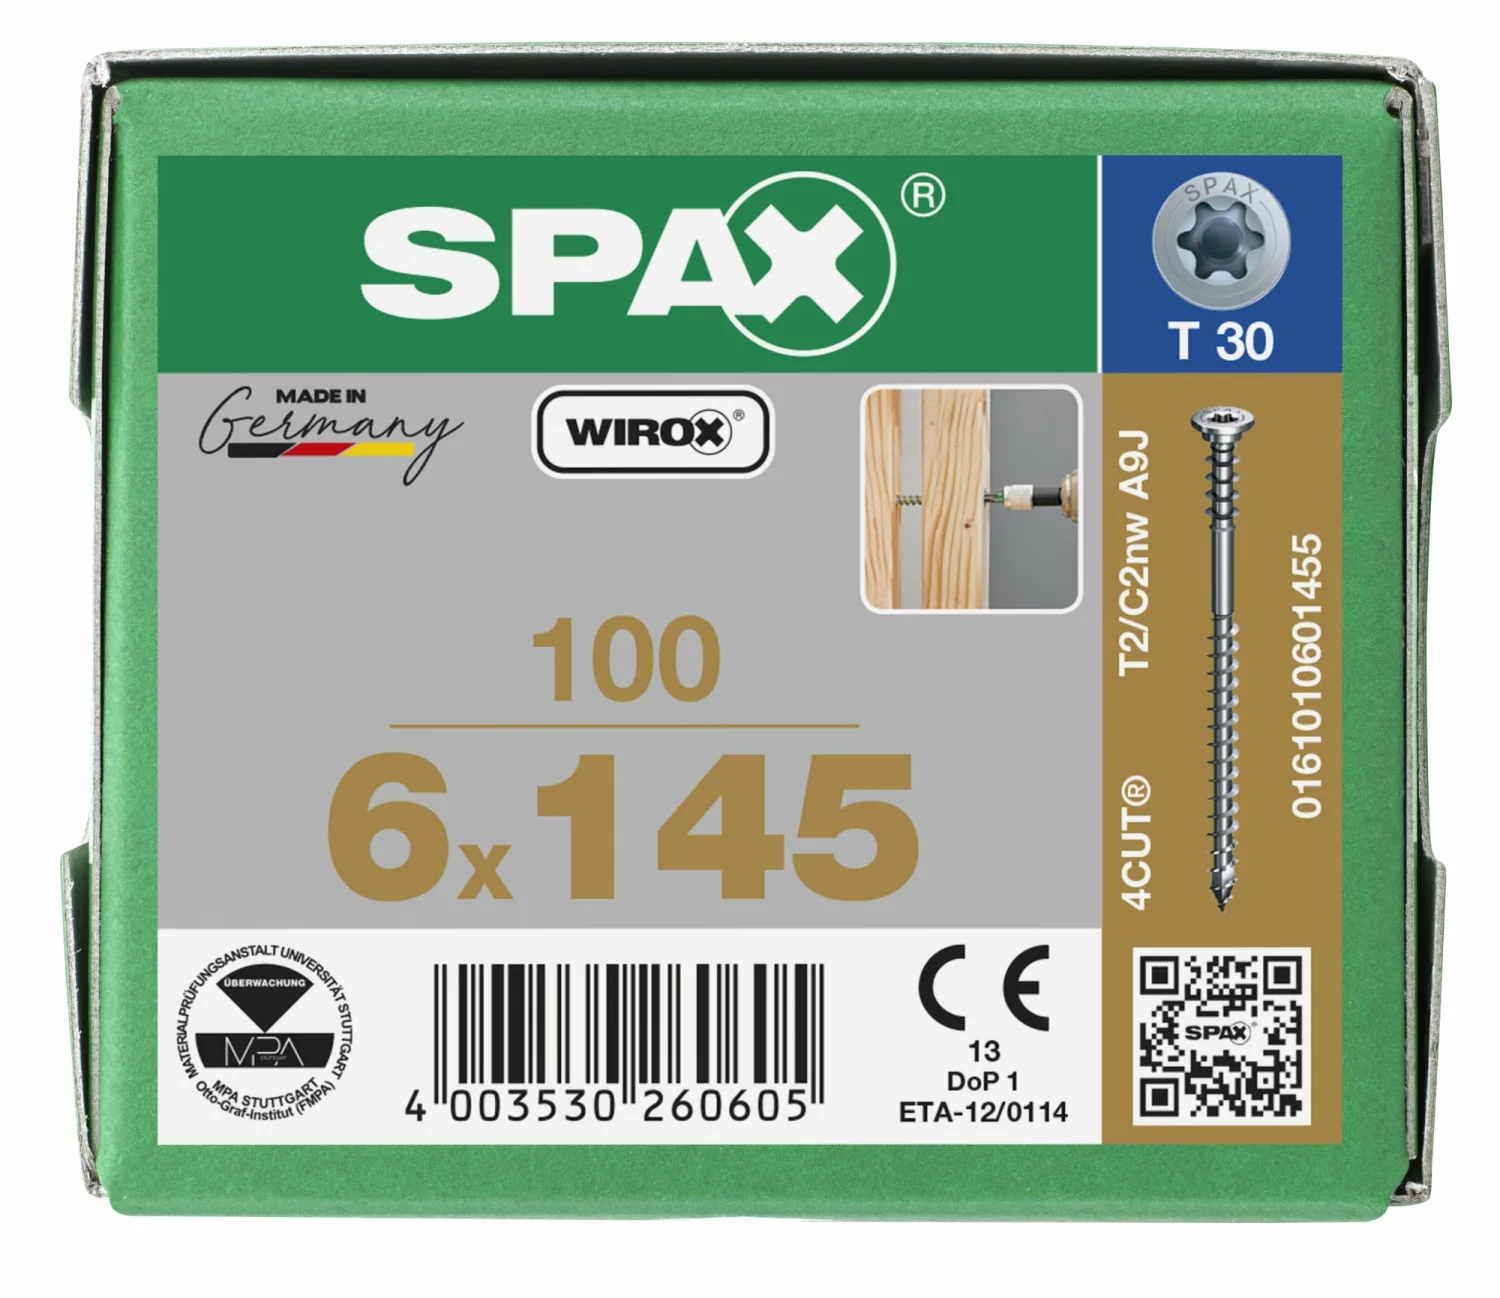 SPAX 161010601455 Stelschroef, Platkop, 6 x 145, Deeldraad, T-STAR plus T30 - WIROX - 100 stuks-image